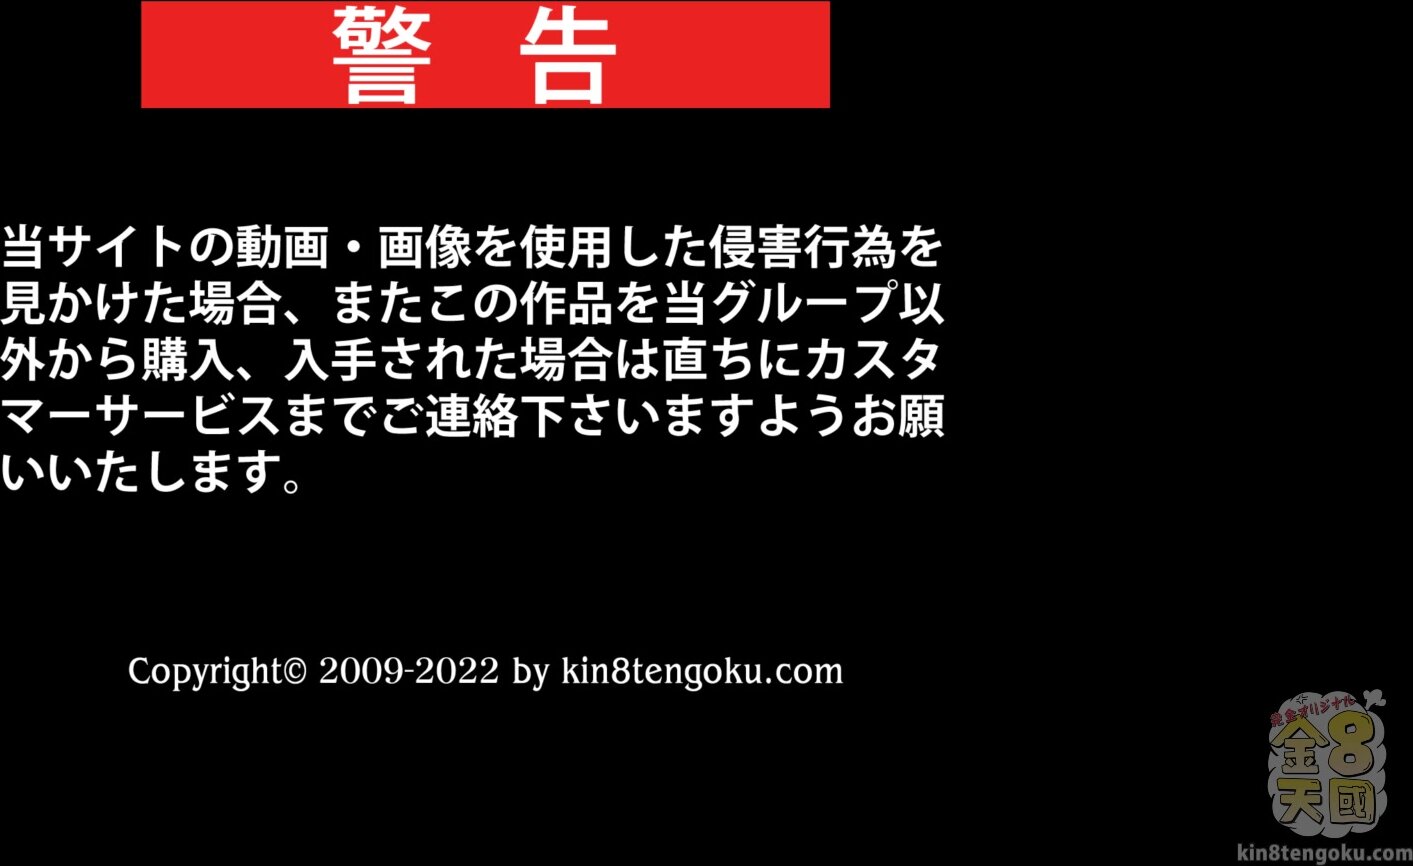 Kin8tengoku - Matty - Japanese Style Massage Vol 1 in HD